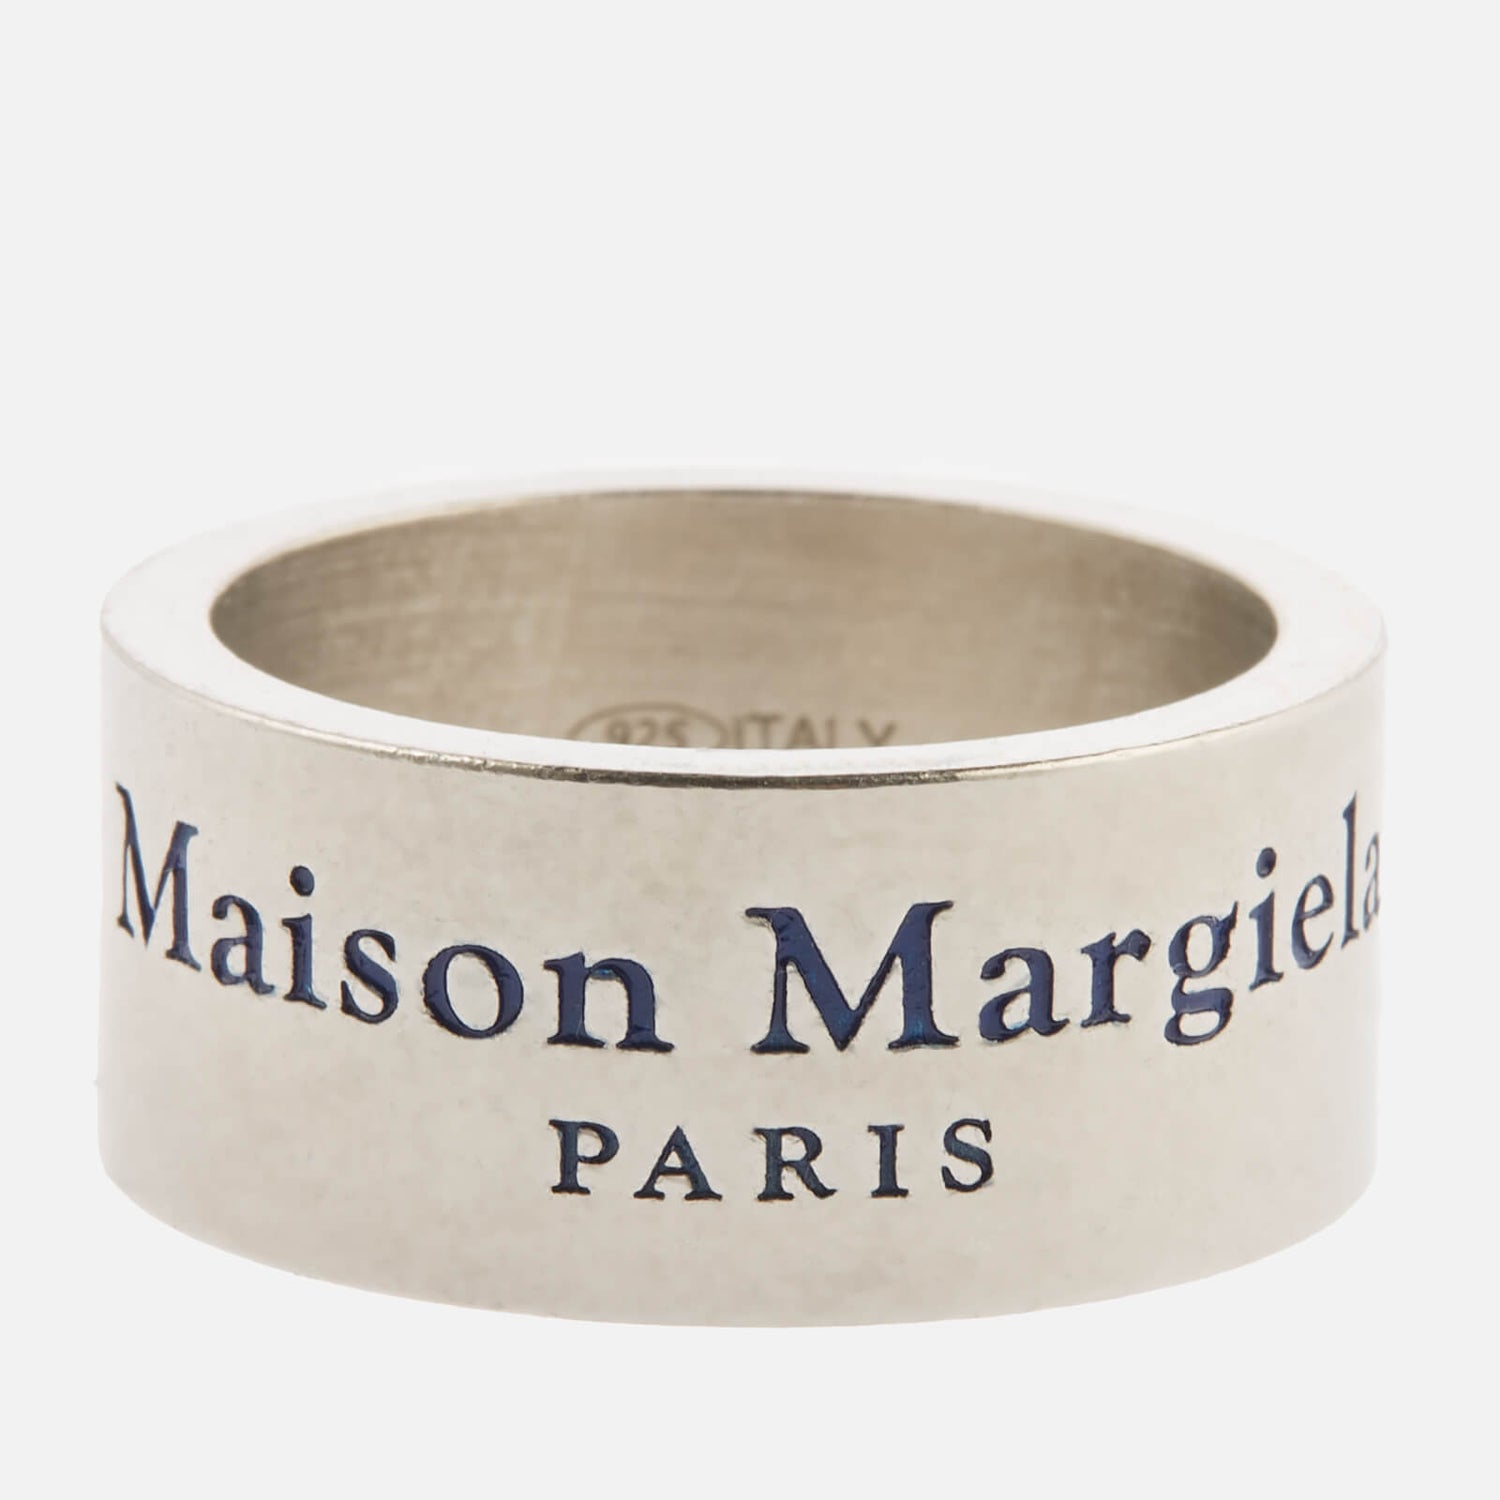 Maison Margiela Men's Ring - Dirty Silver/Medium Blue/Raw Indigo